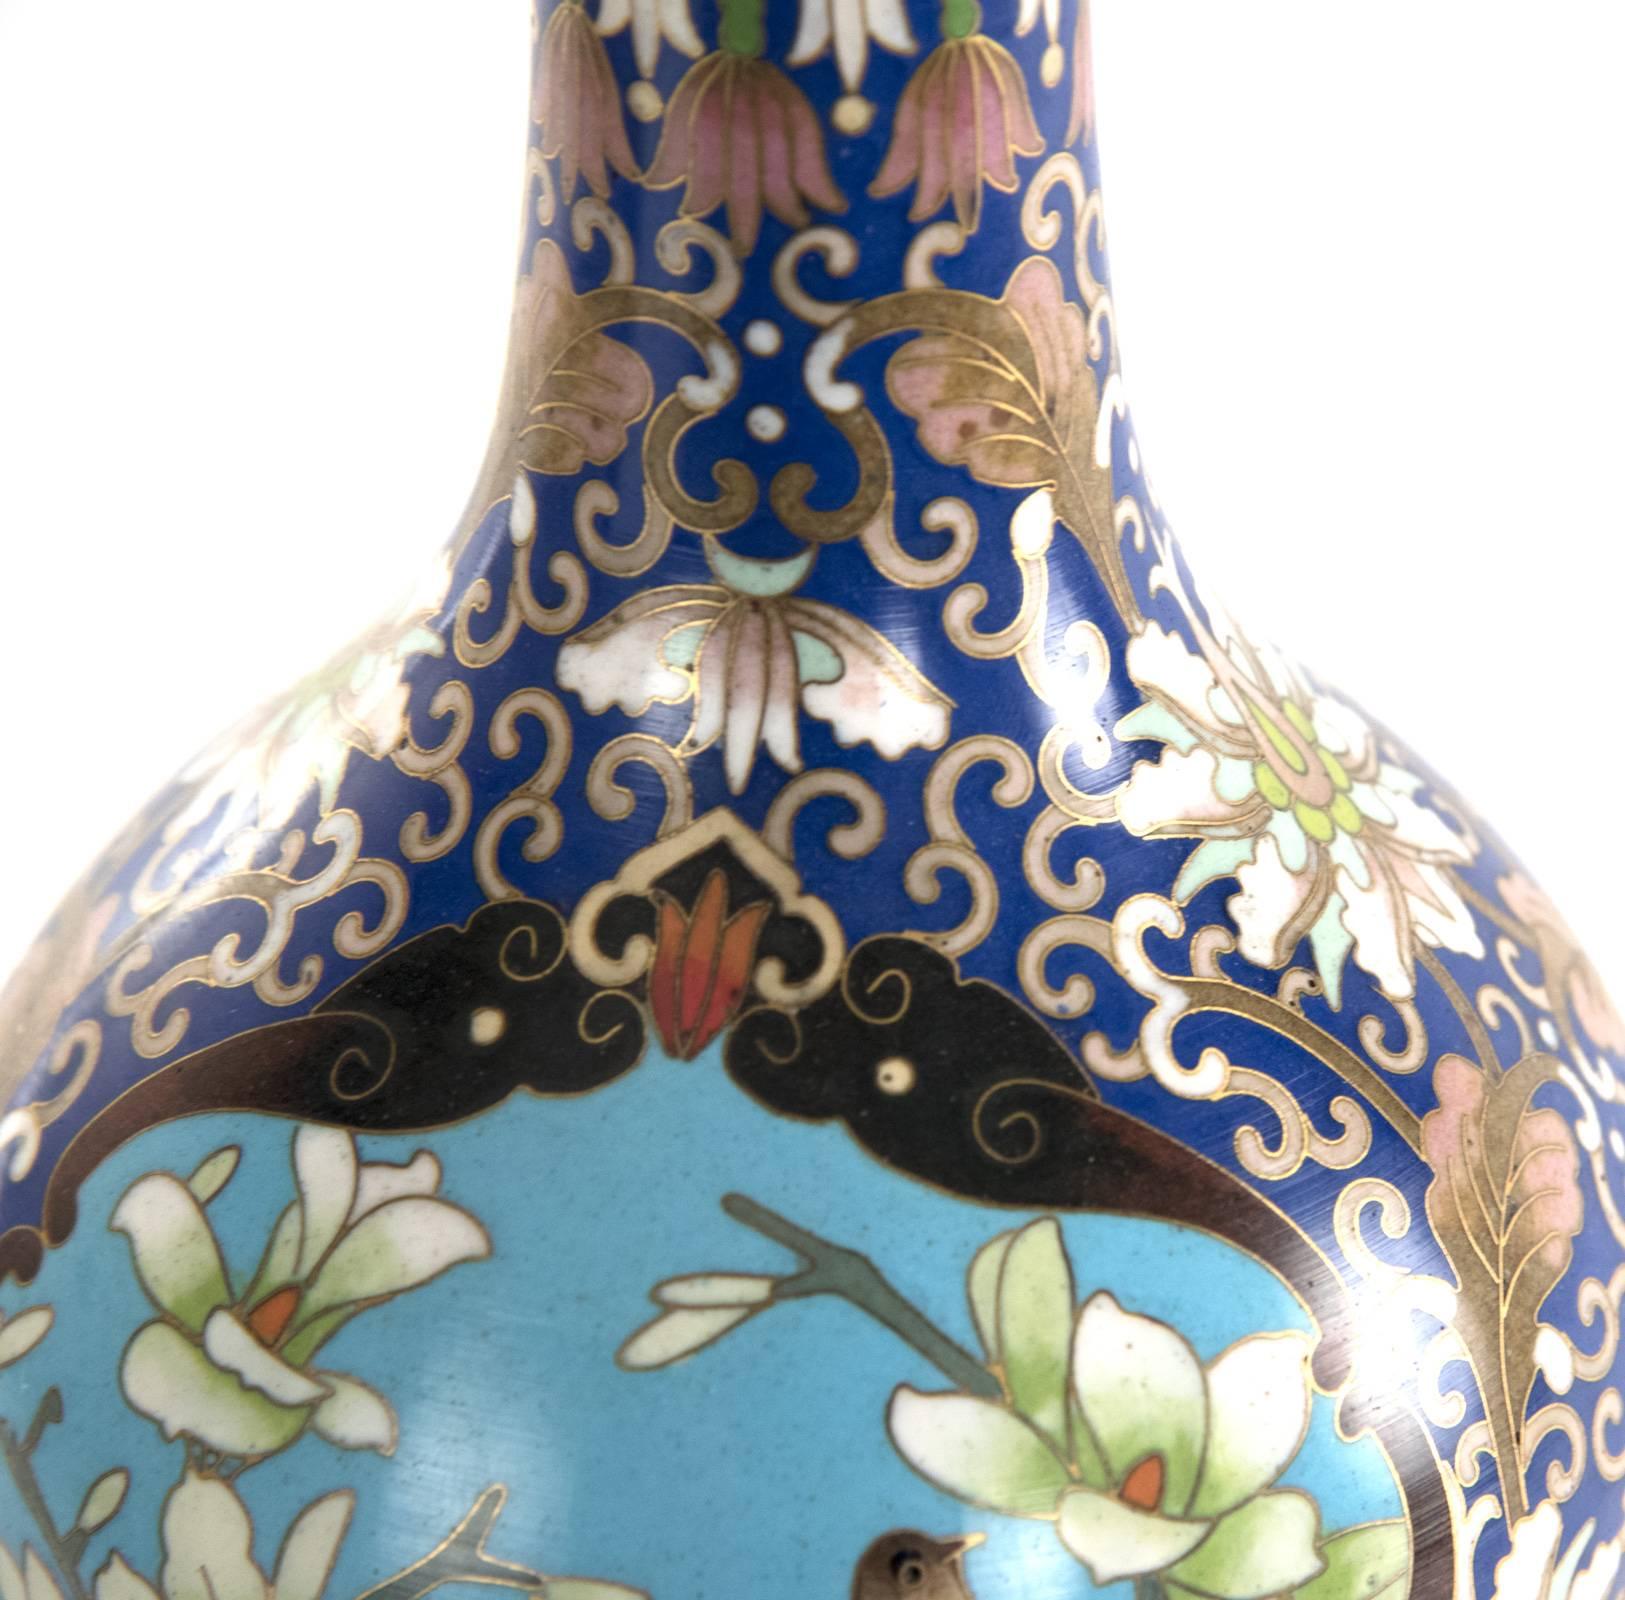 chinese gourd vase